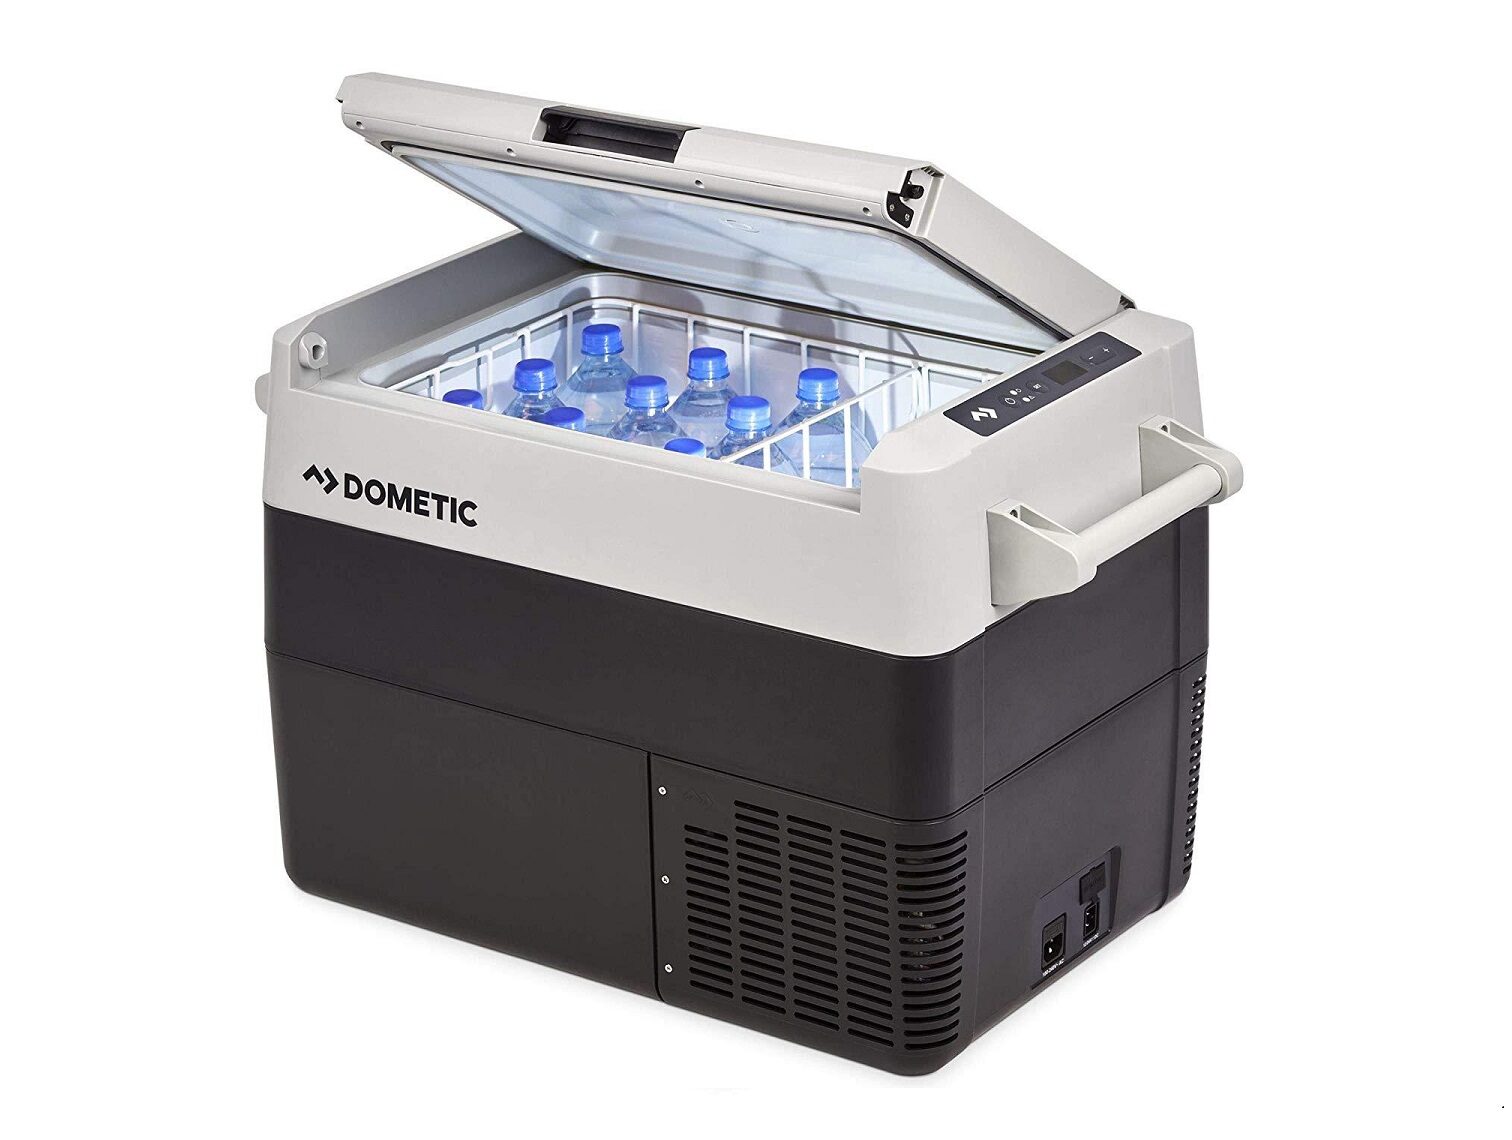 Dometic Cff 45 Coolbox Freezer 44L Studio Front